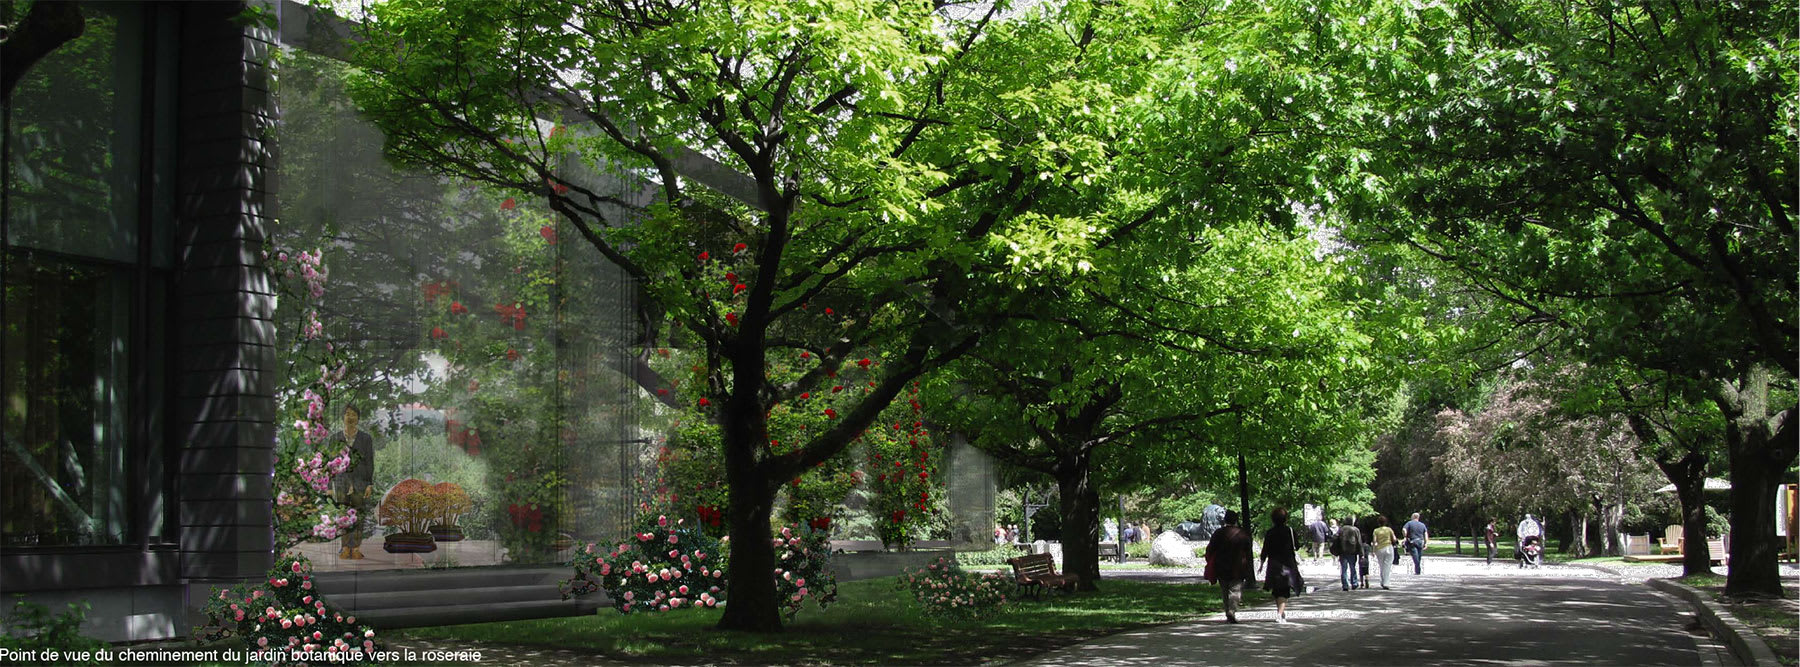 Jardin Botanique Montreal Inspirant Frederic Druot Architecture Les Architectes Fabg Lacaton